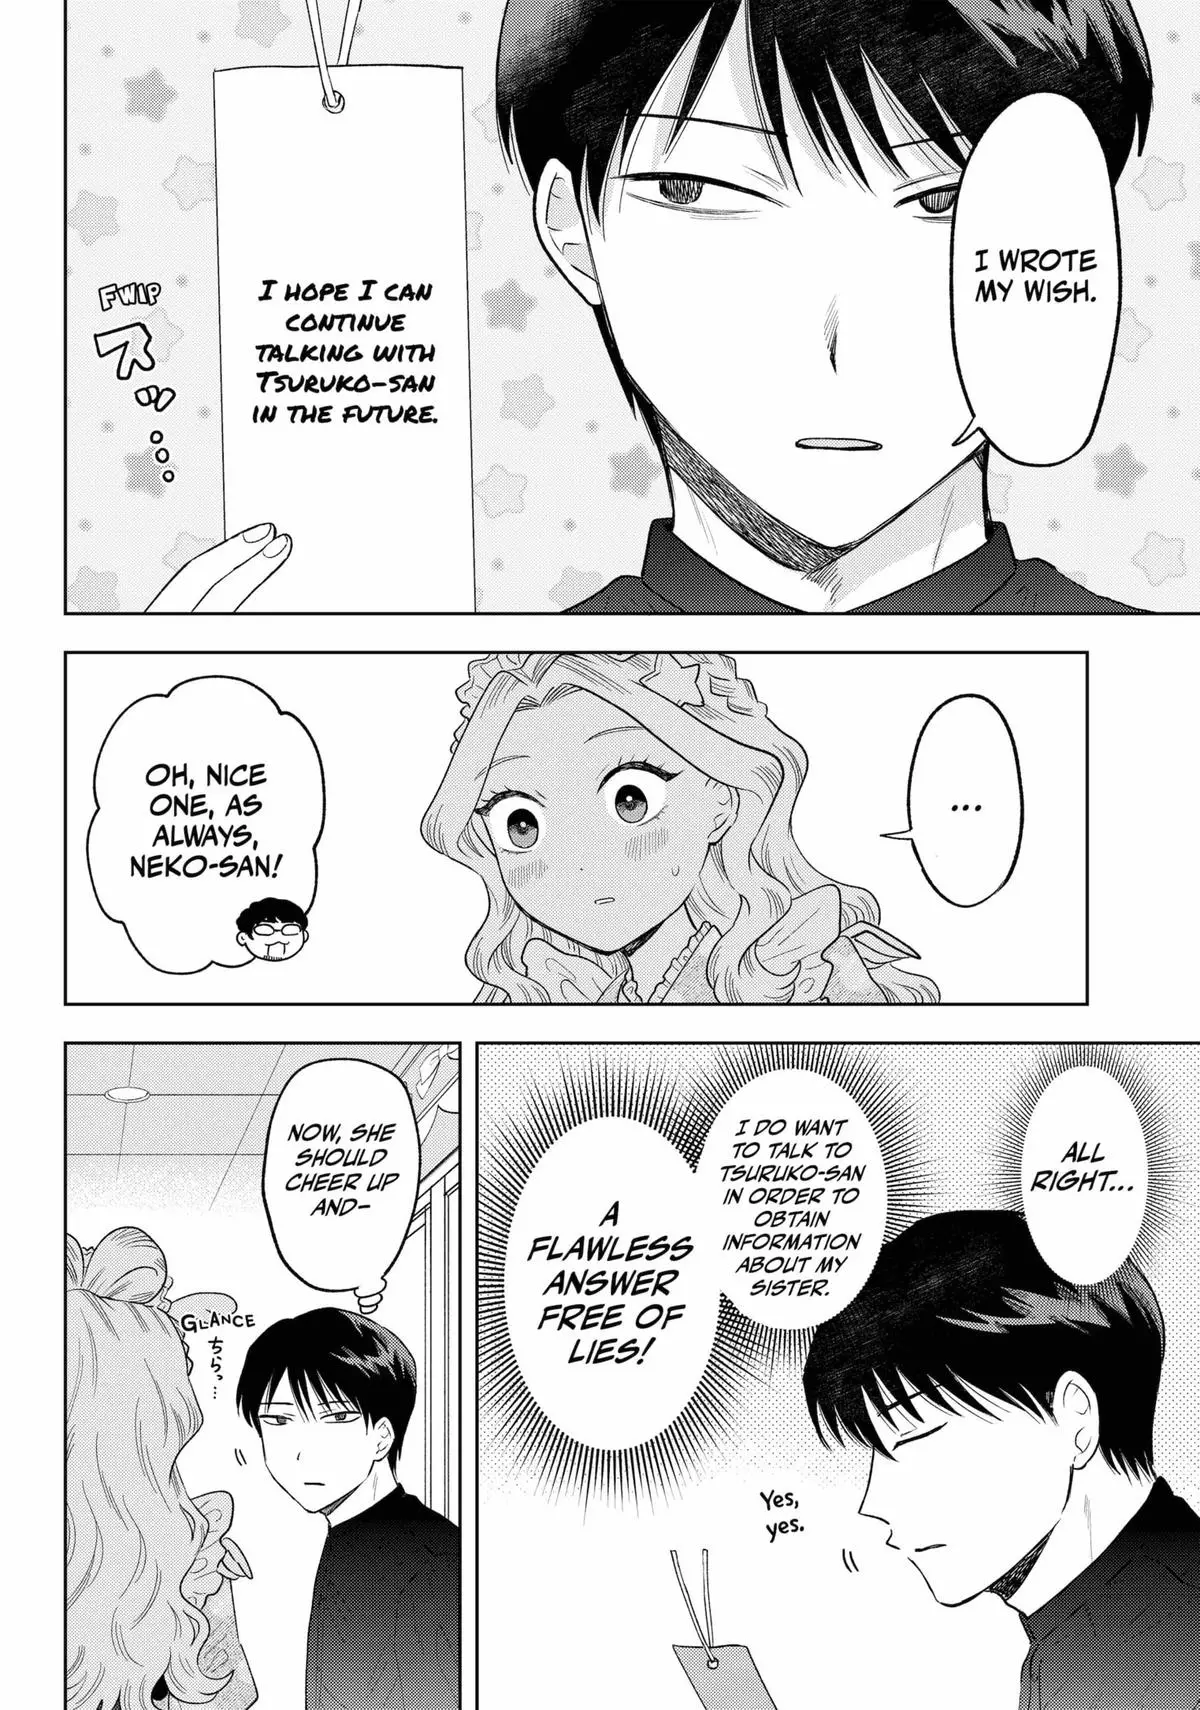 Tsuruko Returns The Favor - 14 page 12-66c994e5